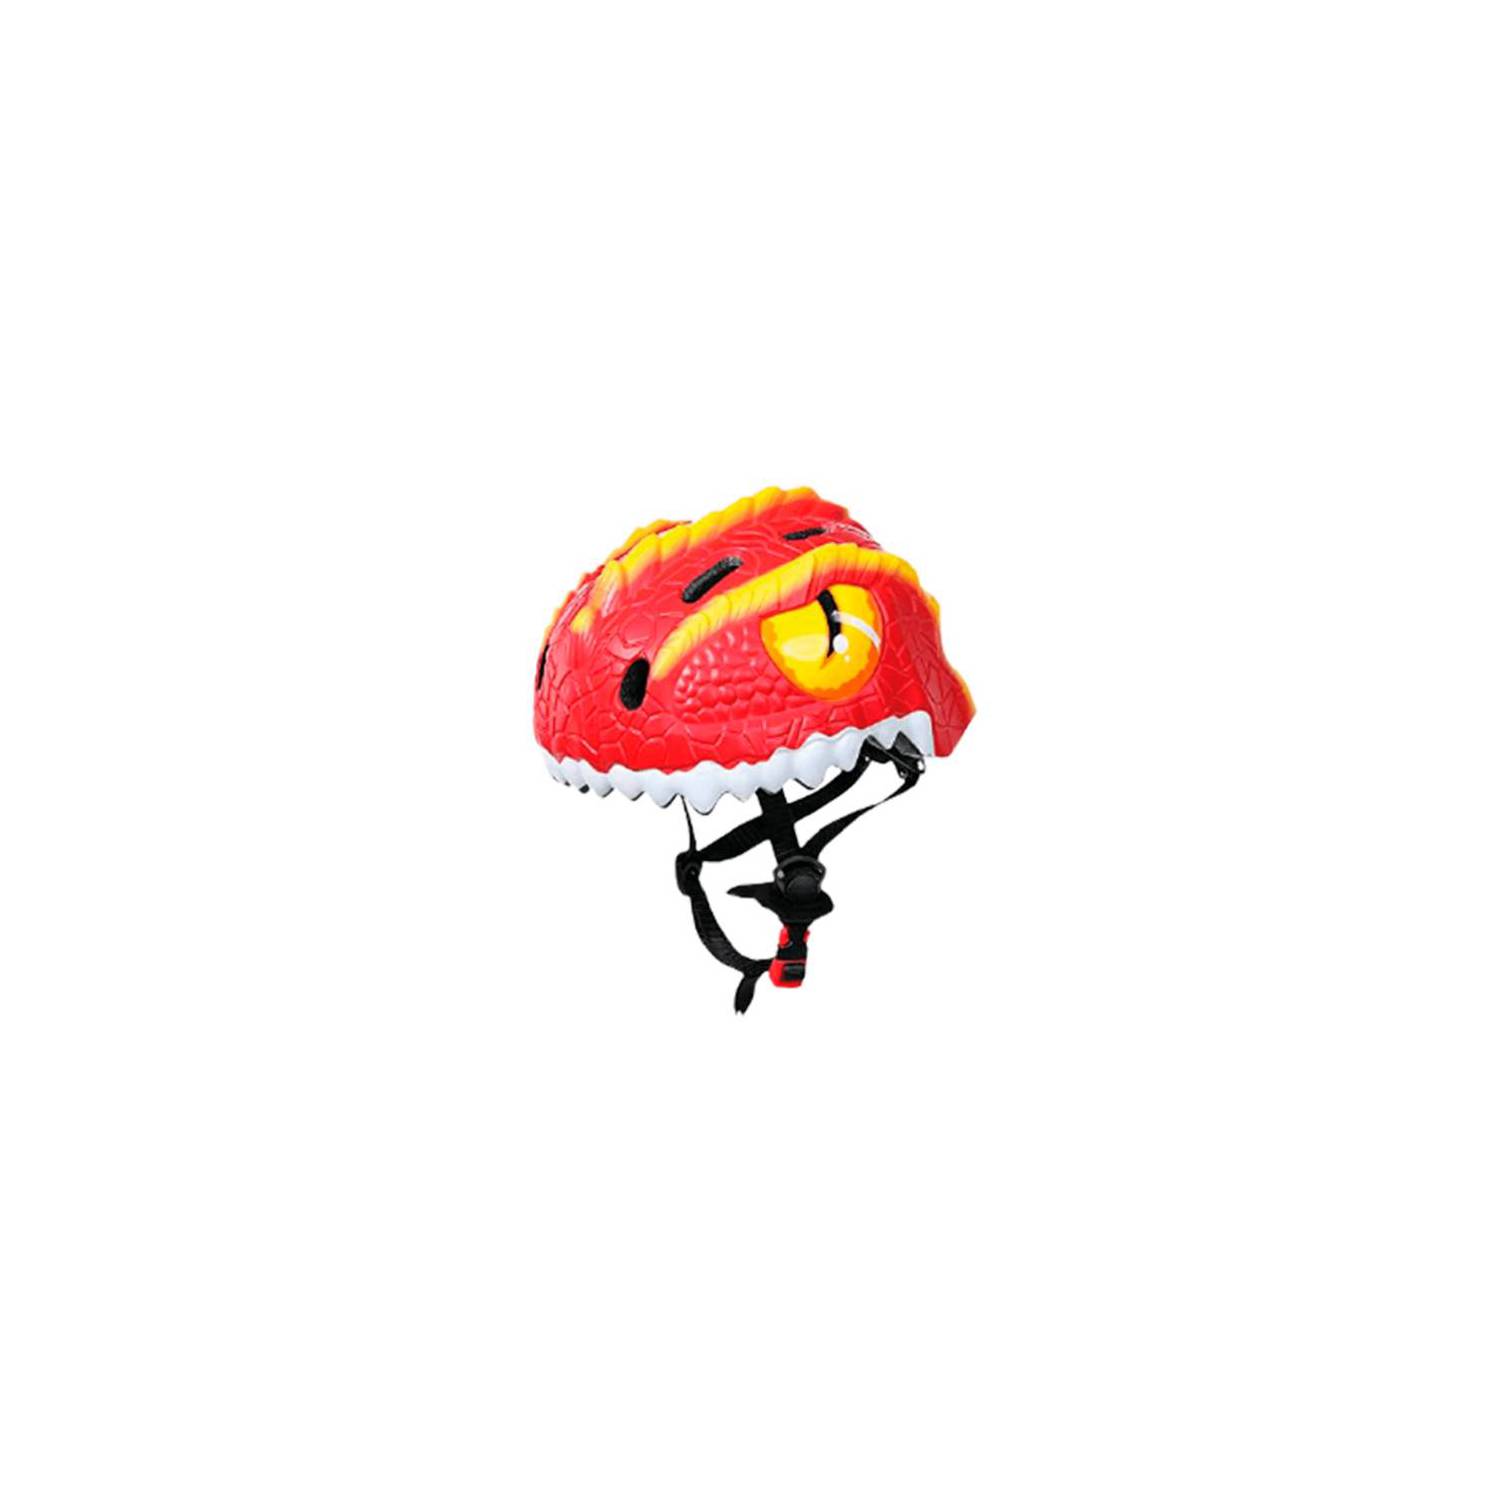 New Born Riders. Casco de niño Bell Bellino bicicleta Rojo Helicopteros.